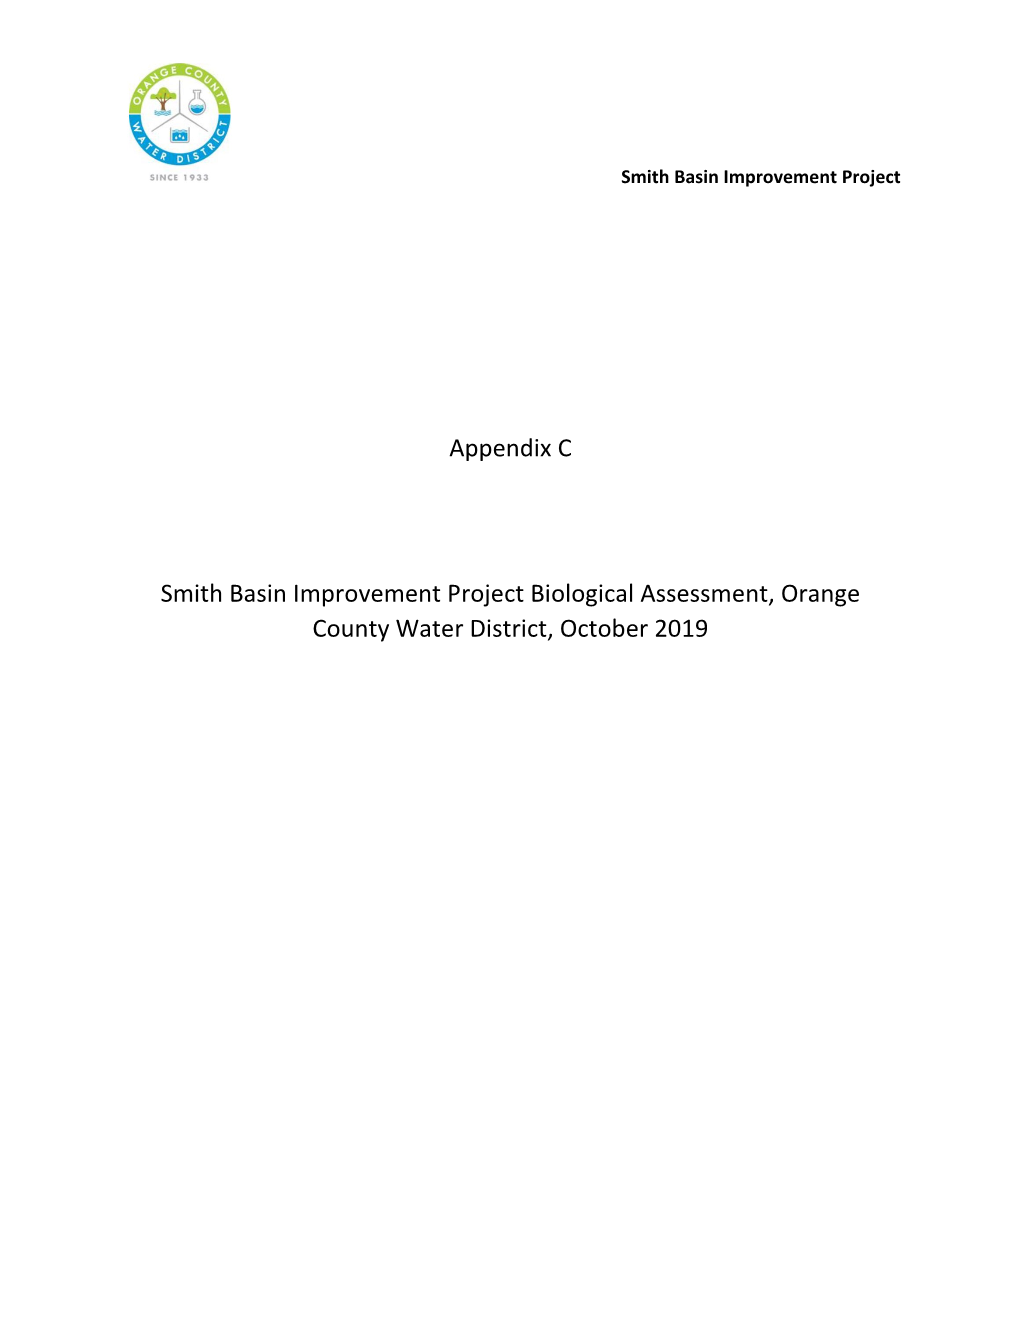 Appendix C Smith Basin Improvement Project Biological Assessment